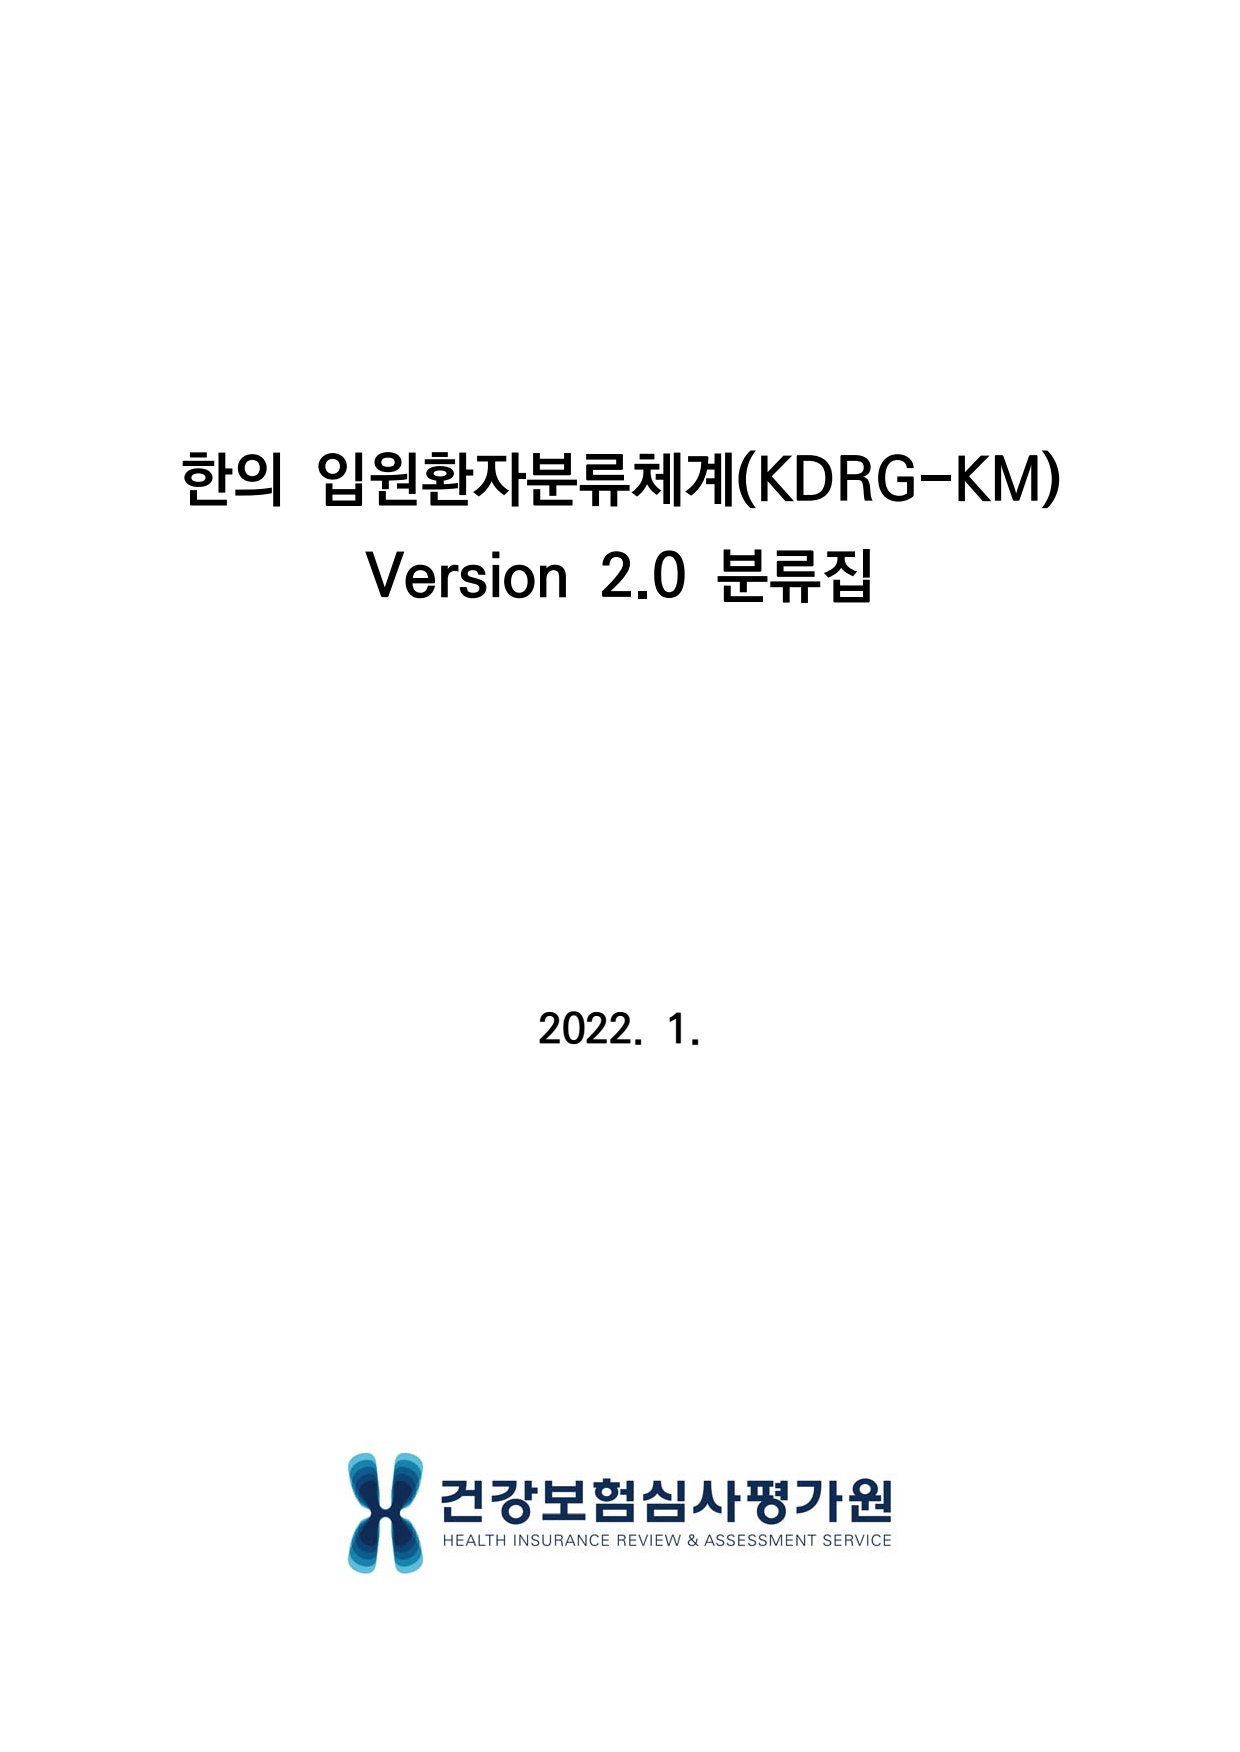 KDRG-KM 버전2.0 분류집